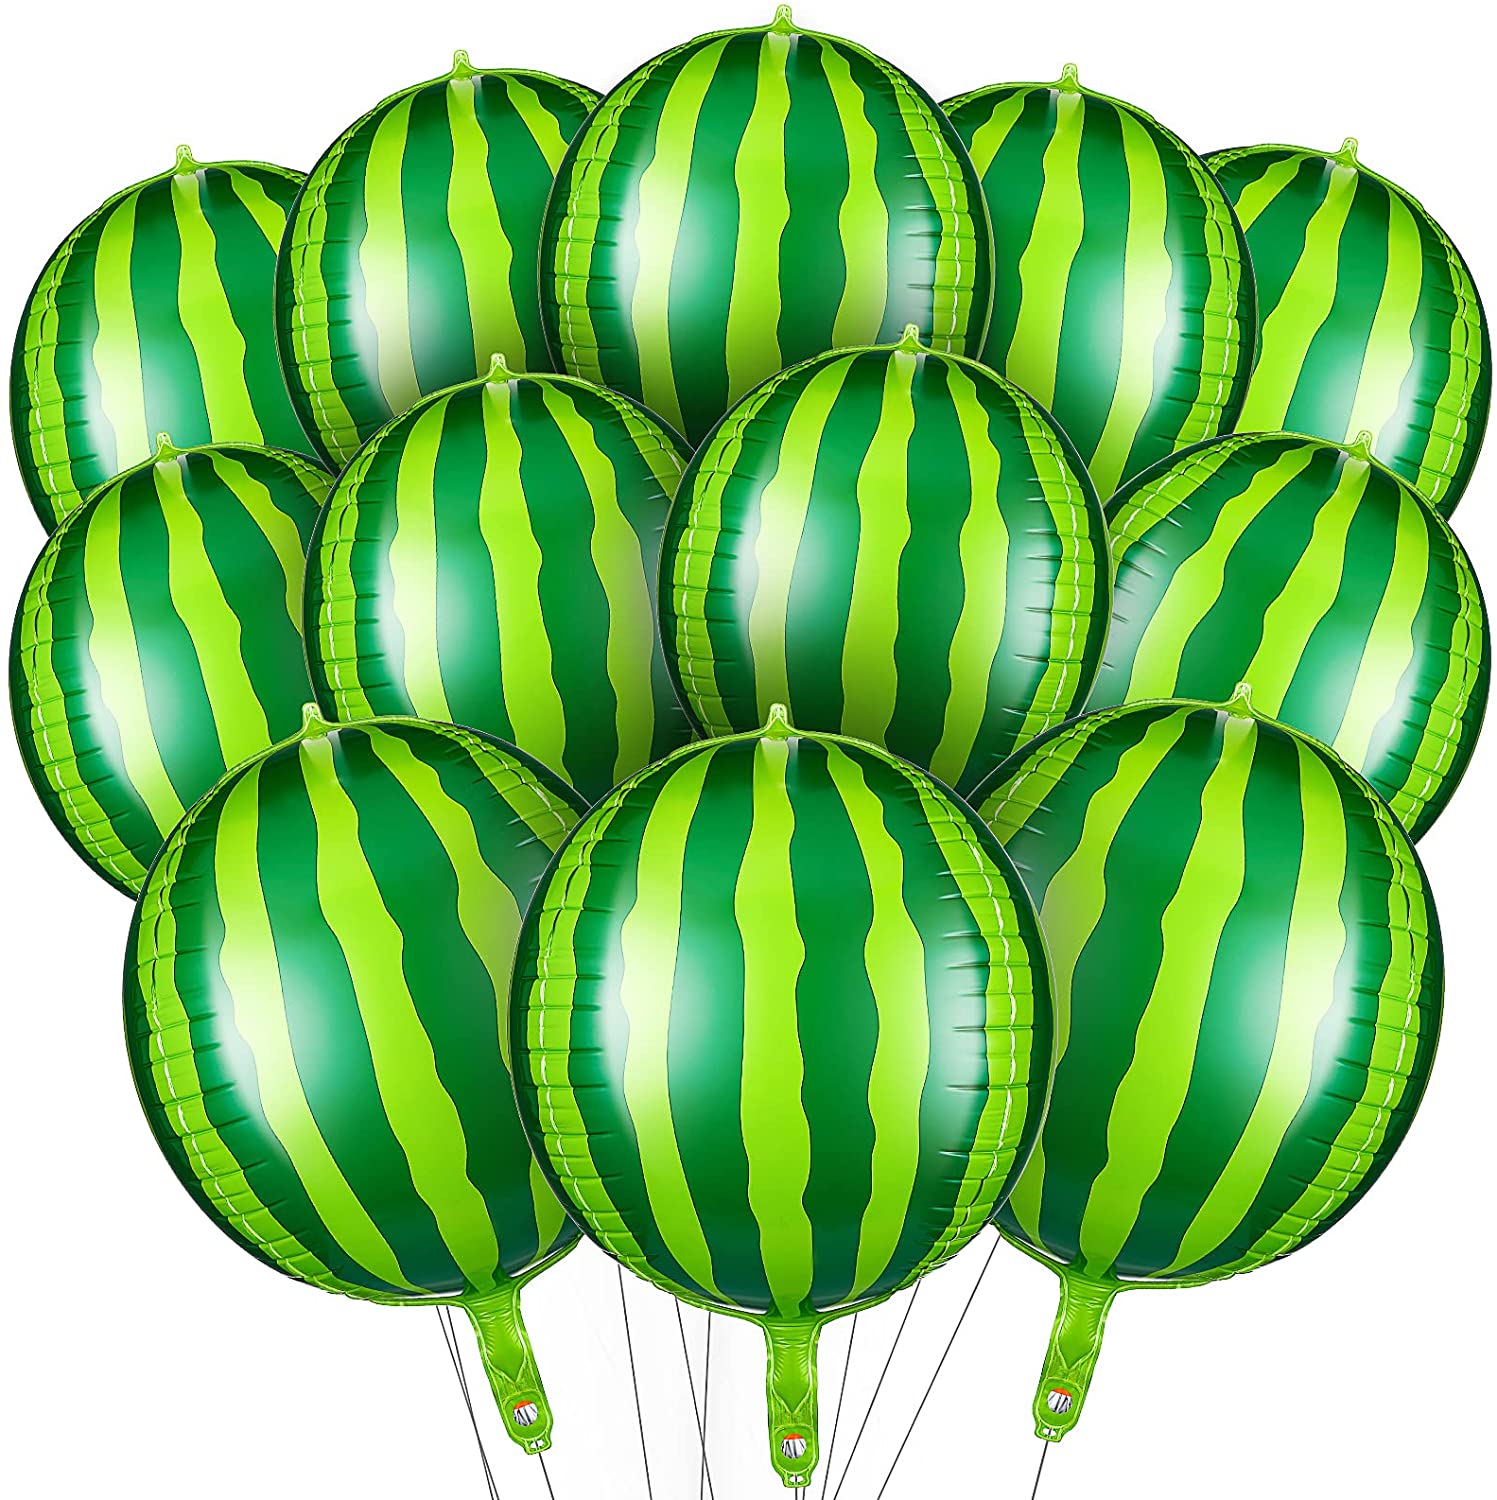 Whole Watermelon Sphere Balloon 55887 - 22 in